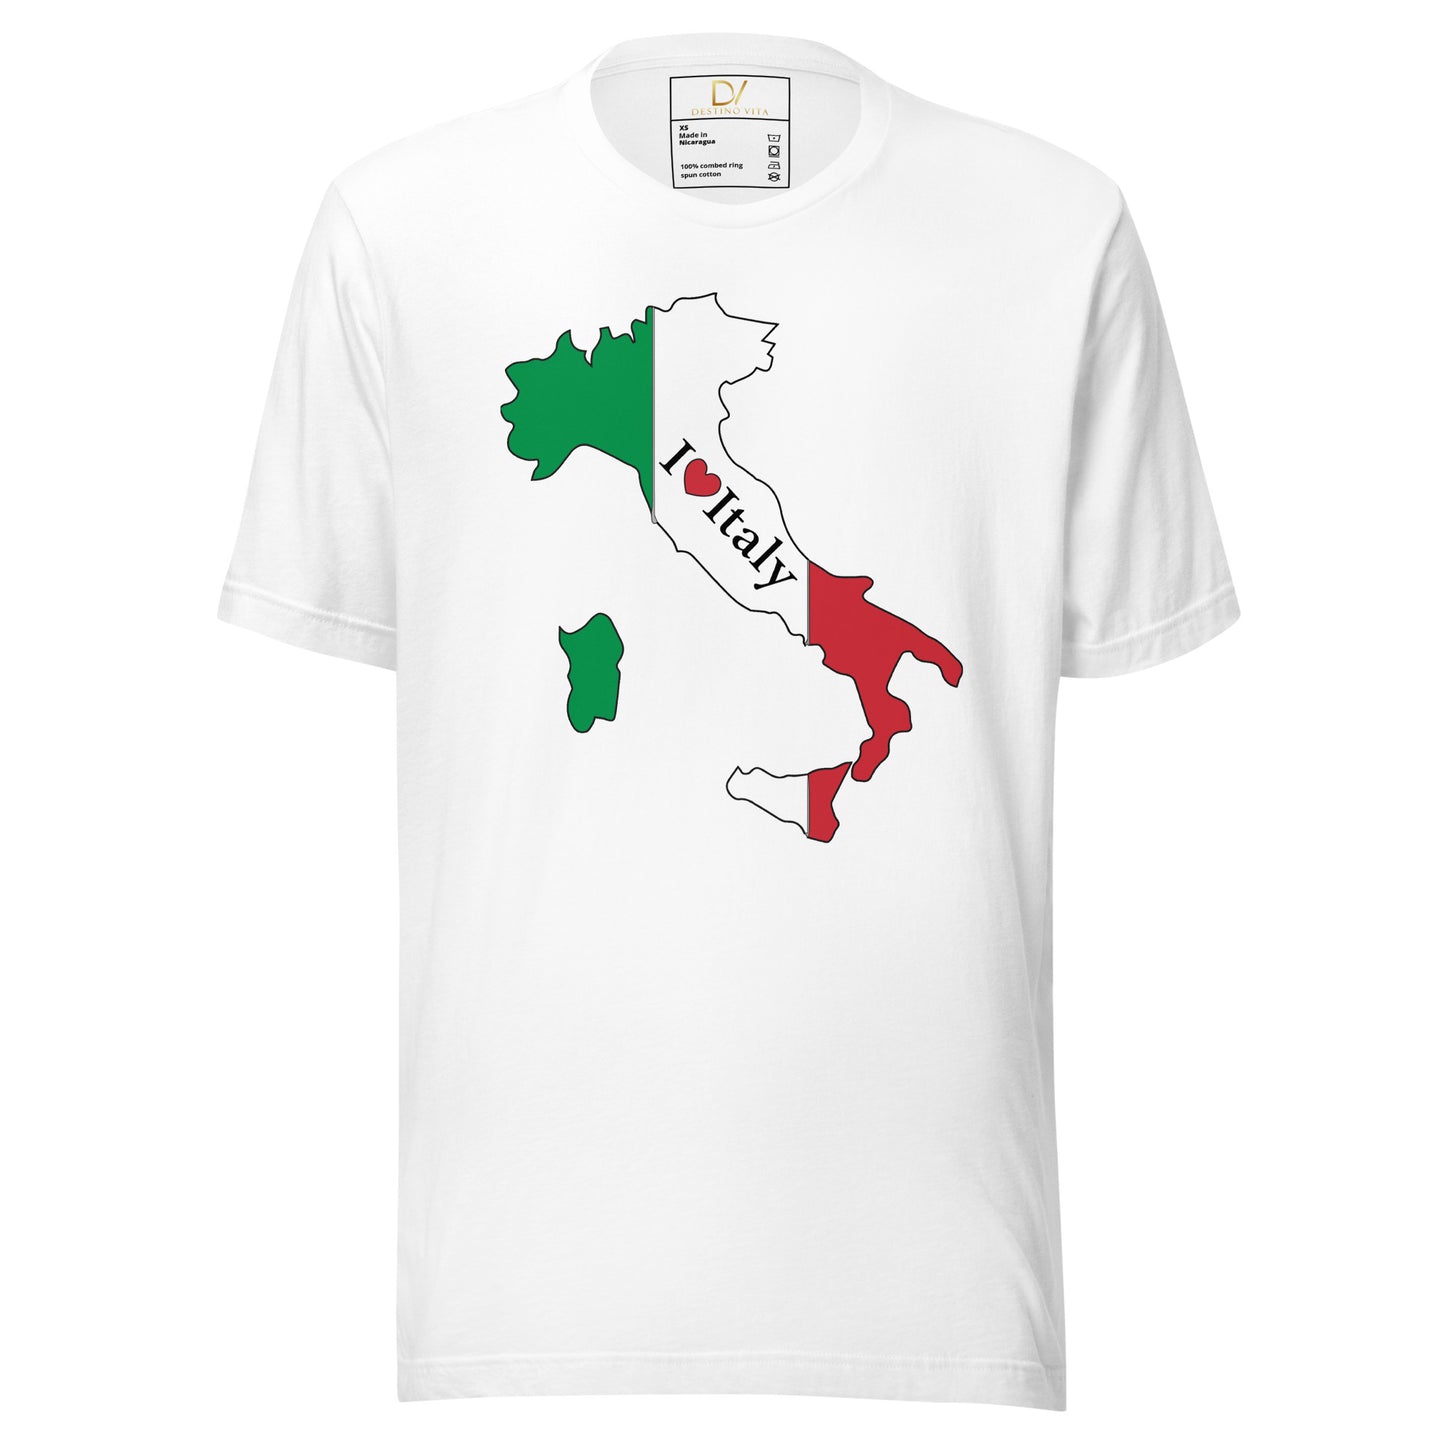 Unisex t-shirt - I Love Italy Map